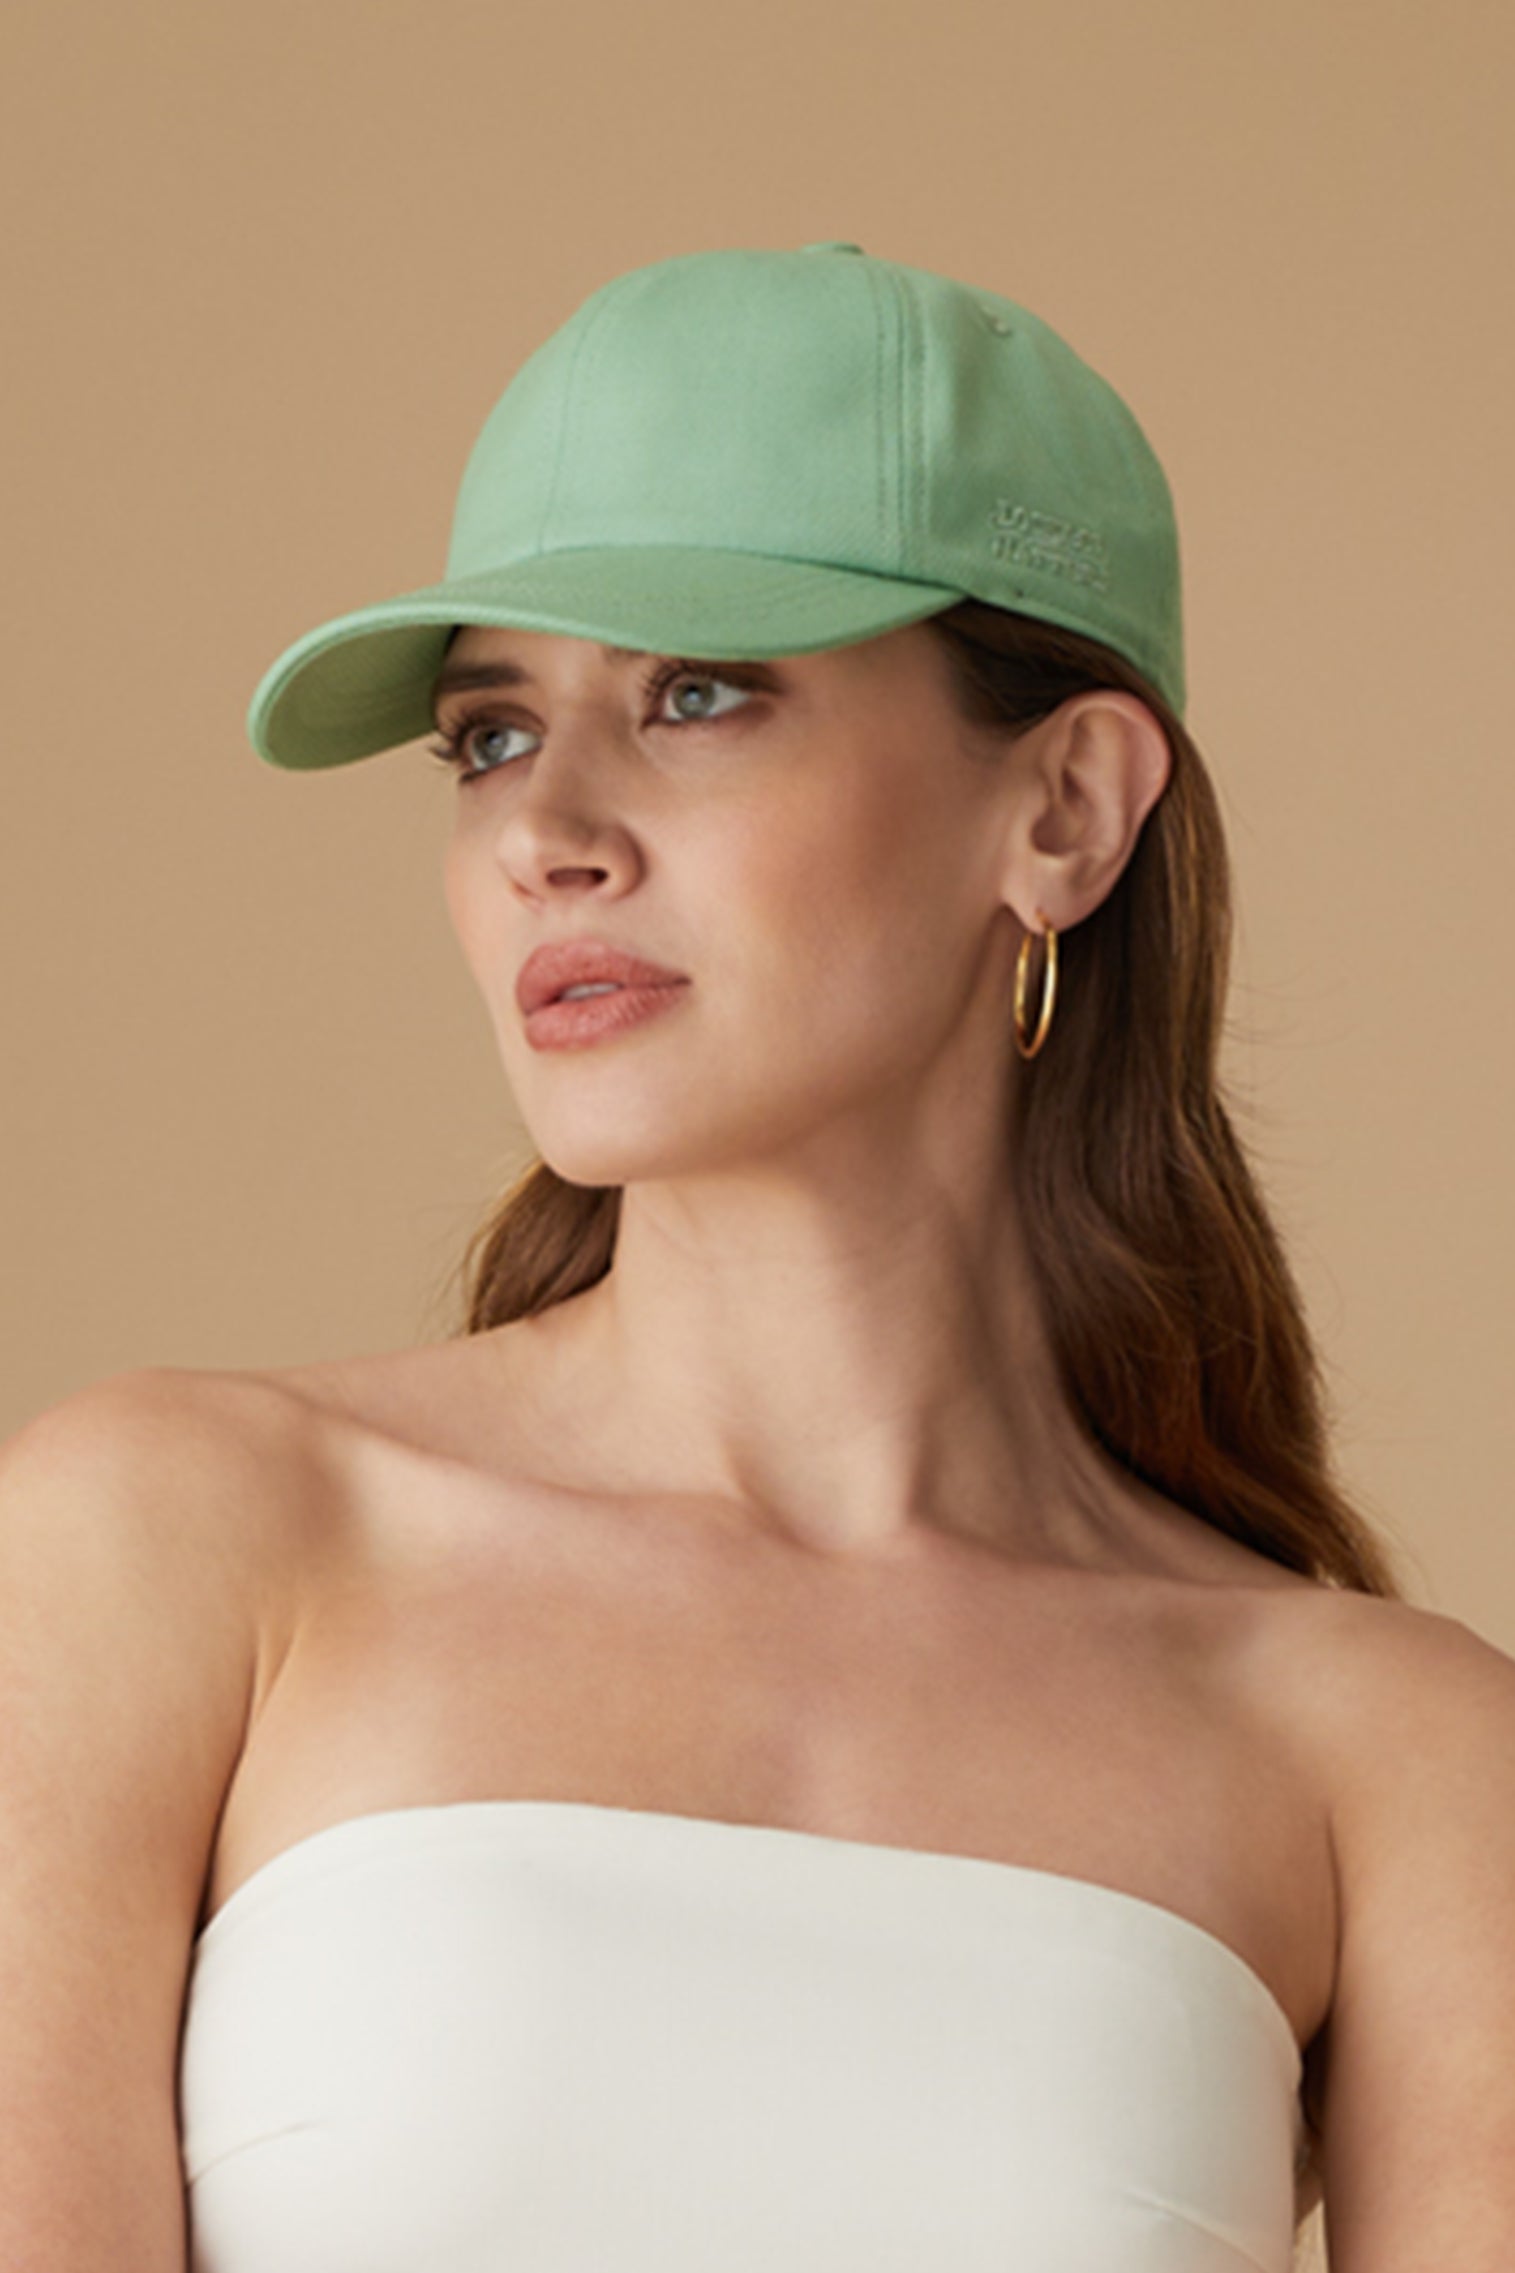 Adjustable Green Baseball Cap - New Season Women's Hats - Lock & Co. Hatters London UK